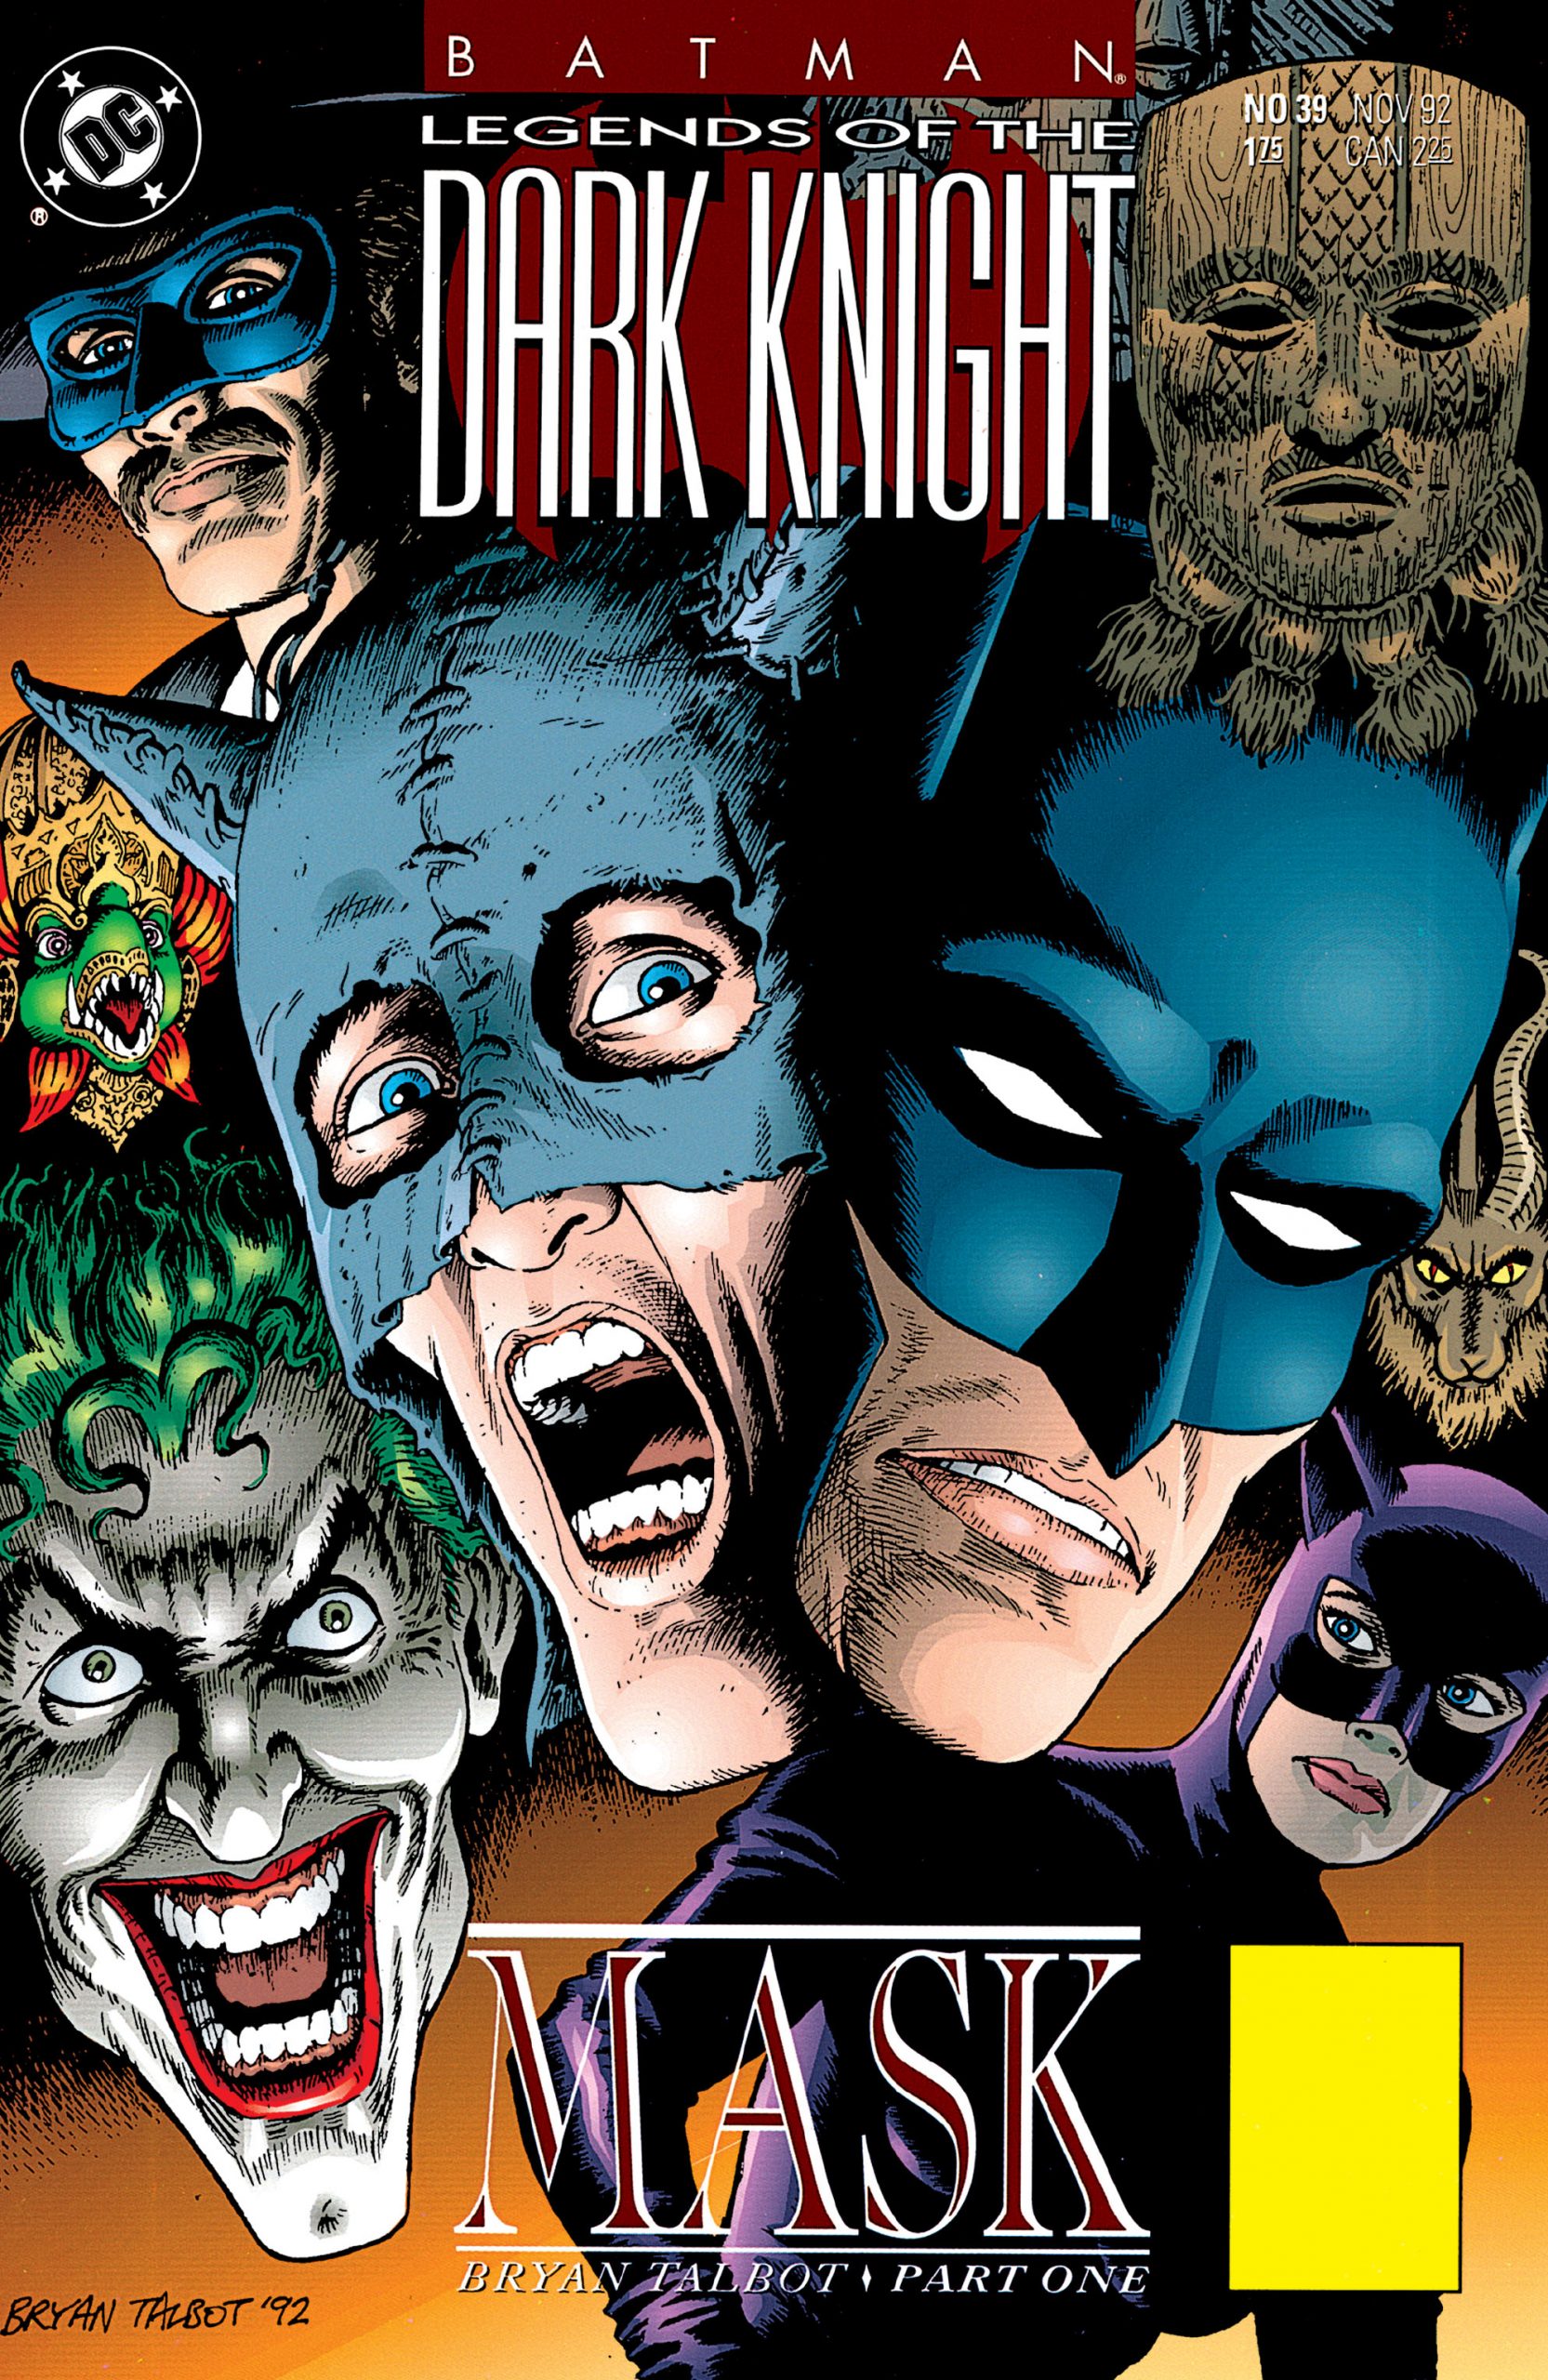 Batman: Legends of the Dark Knight #39 - cover by Bryan Talbot